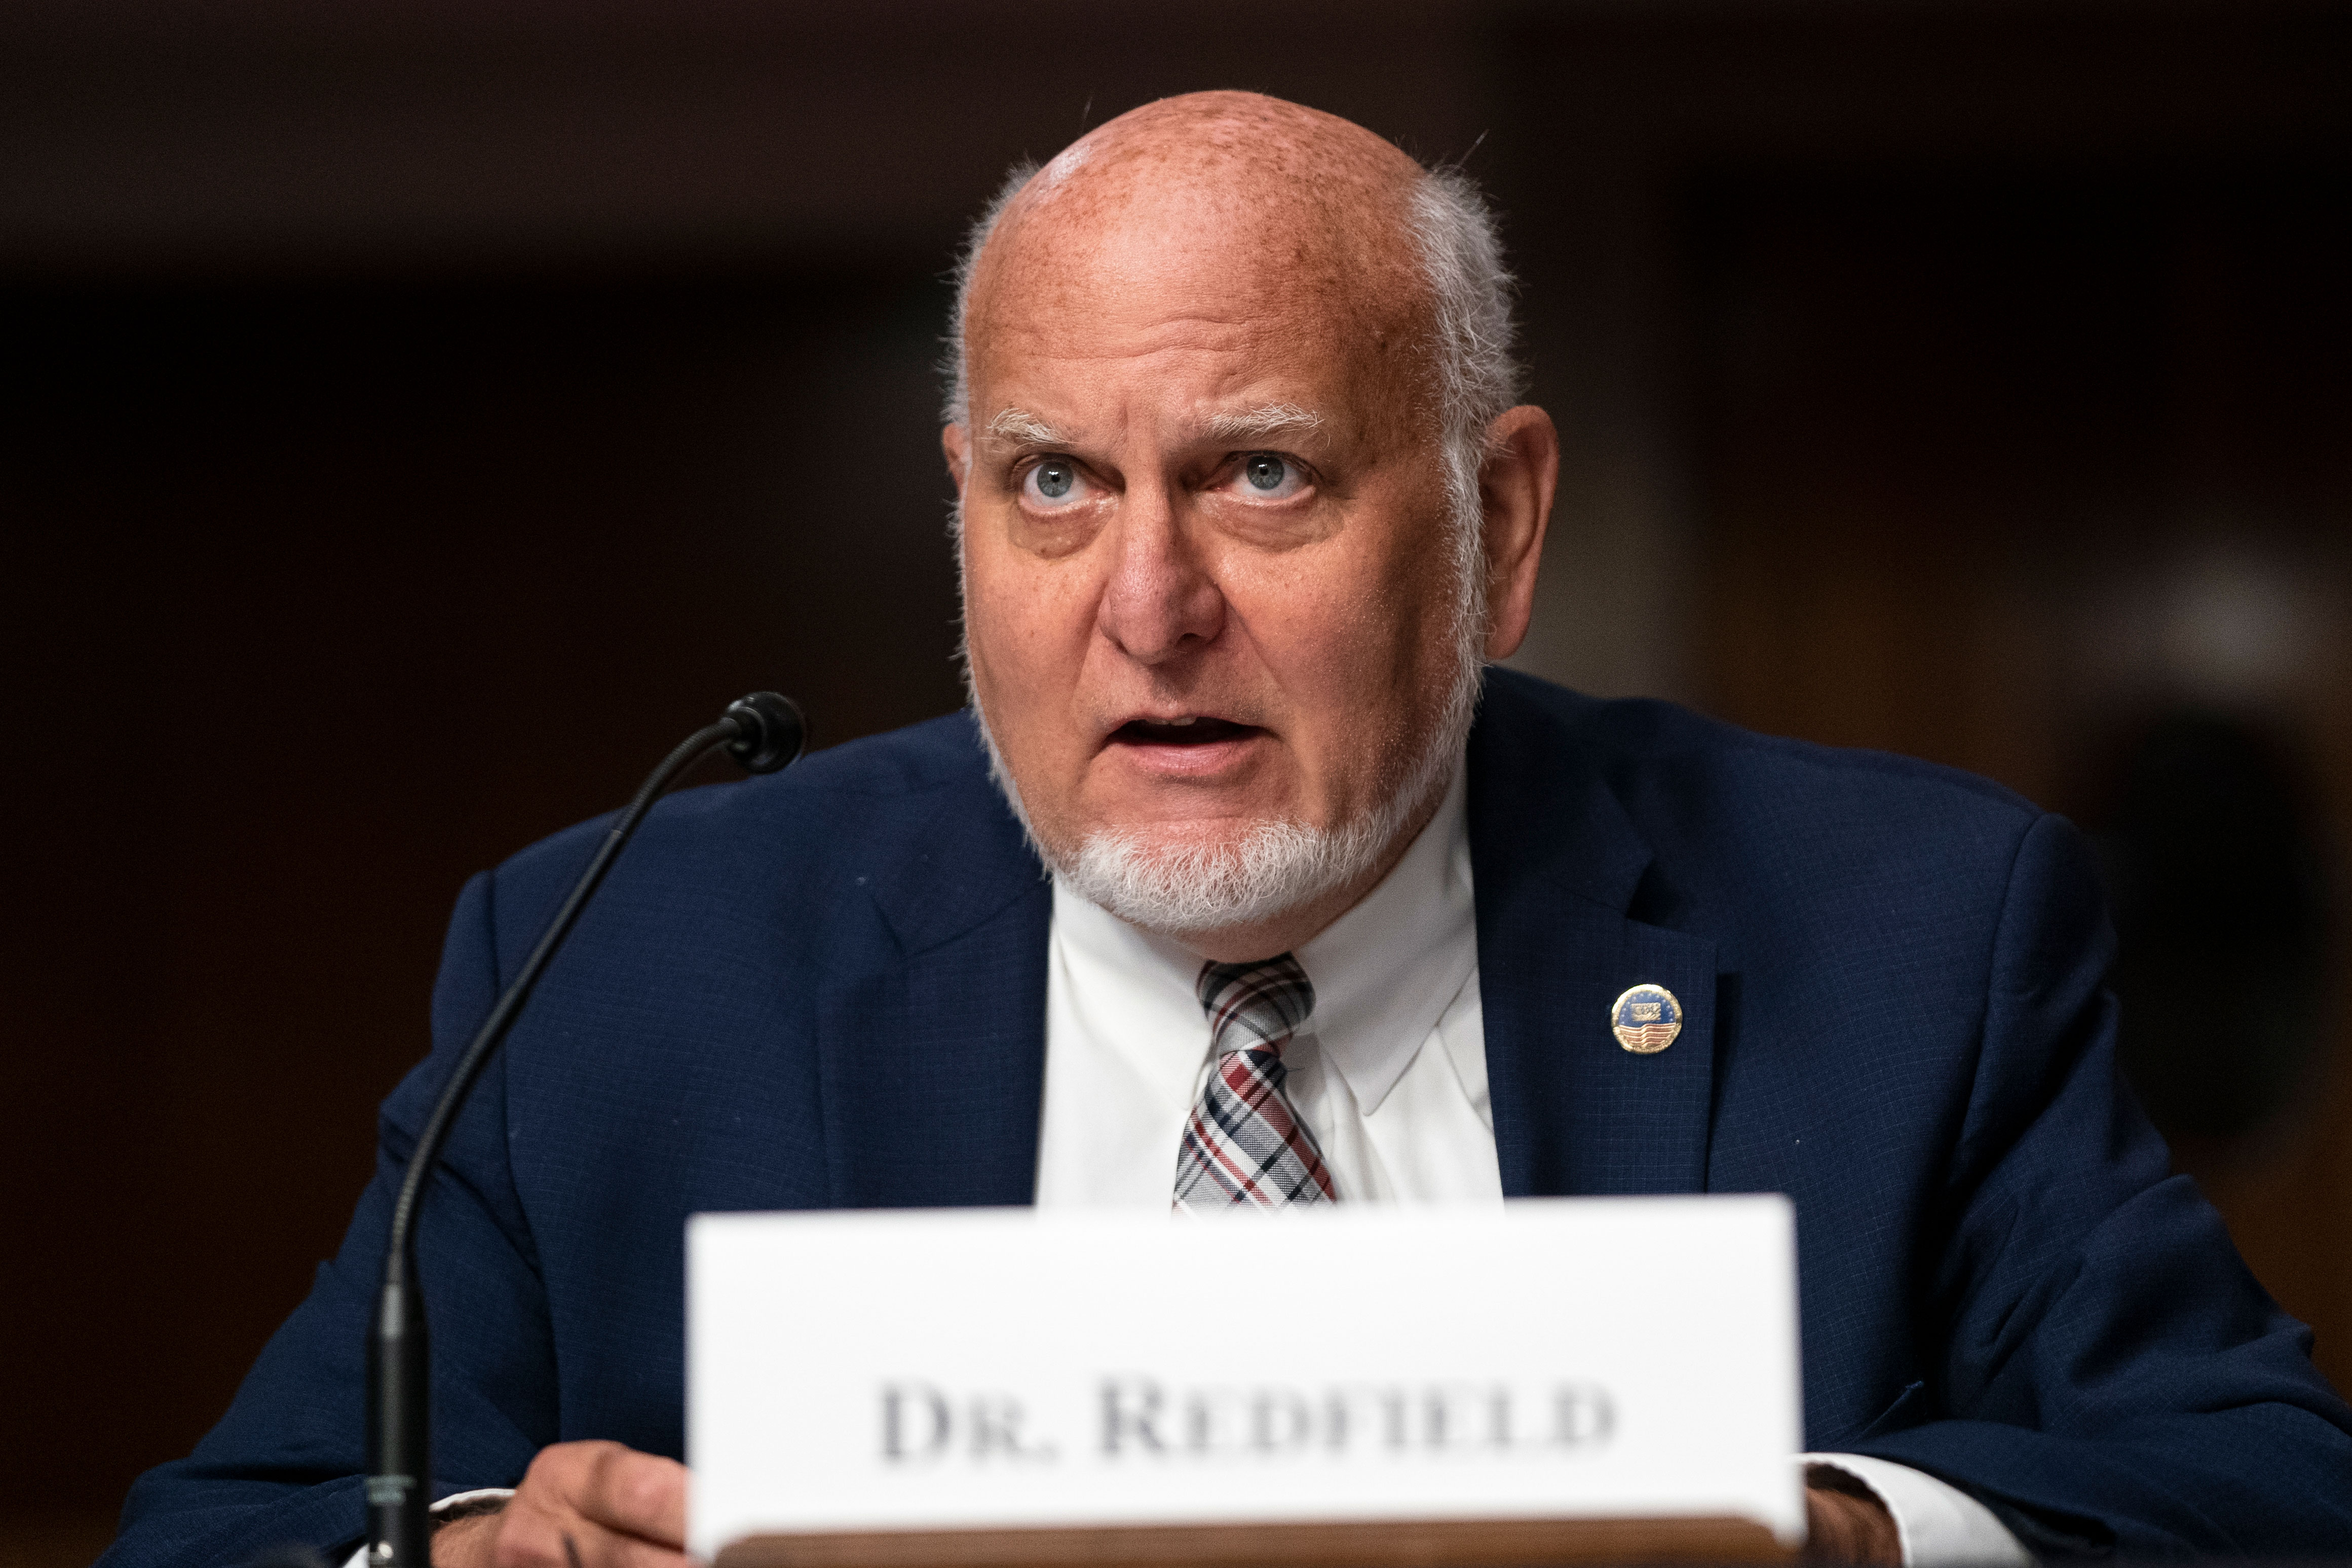 Dr. Robert Redfield testifies in Washington, DC, on September 23.